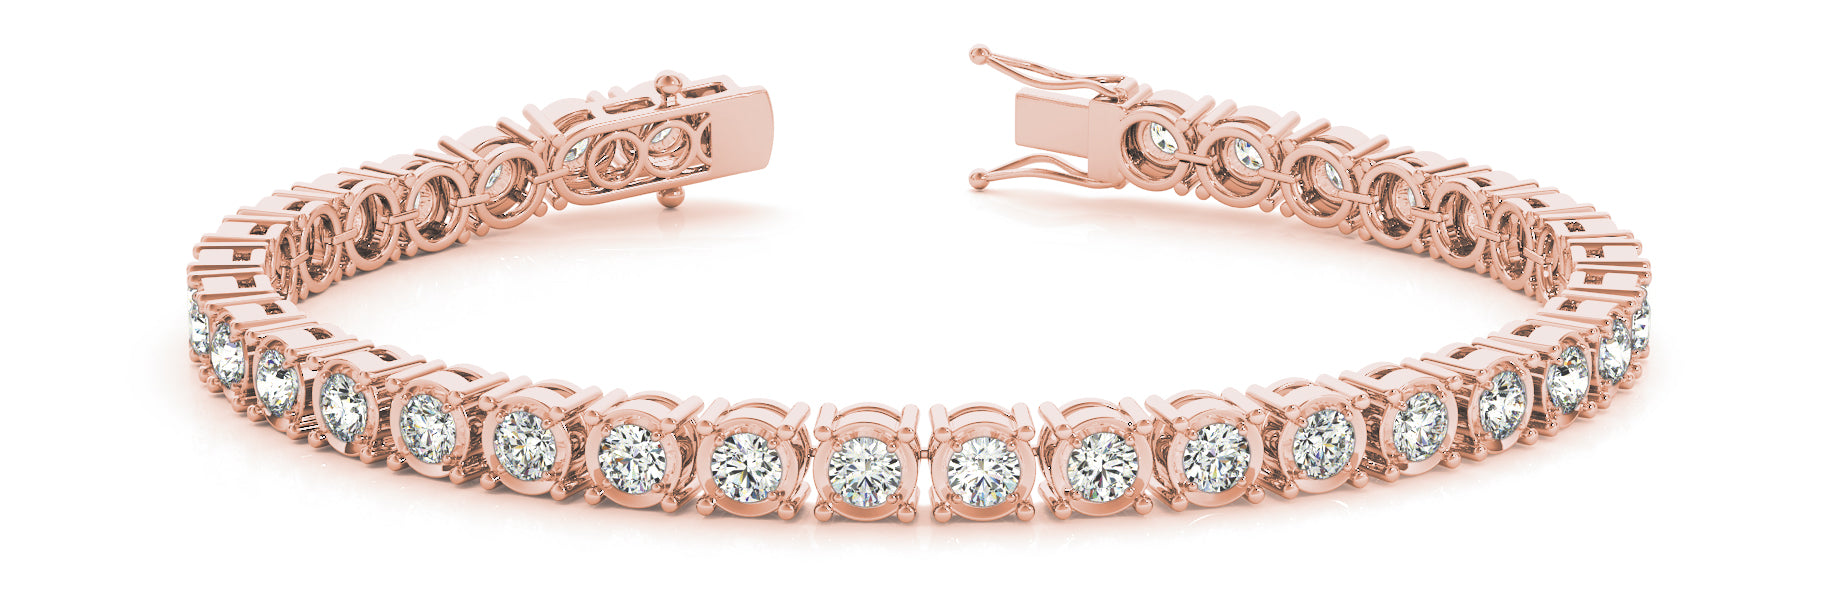 Fancy Diamond Bracelet Ladies 6.79ct tw - 14kt Gold